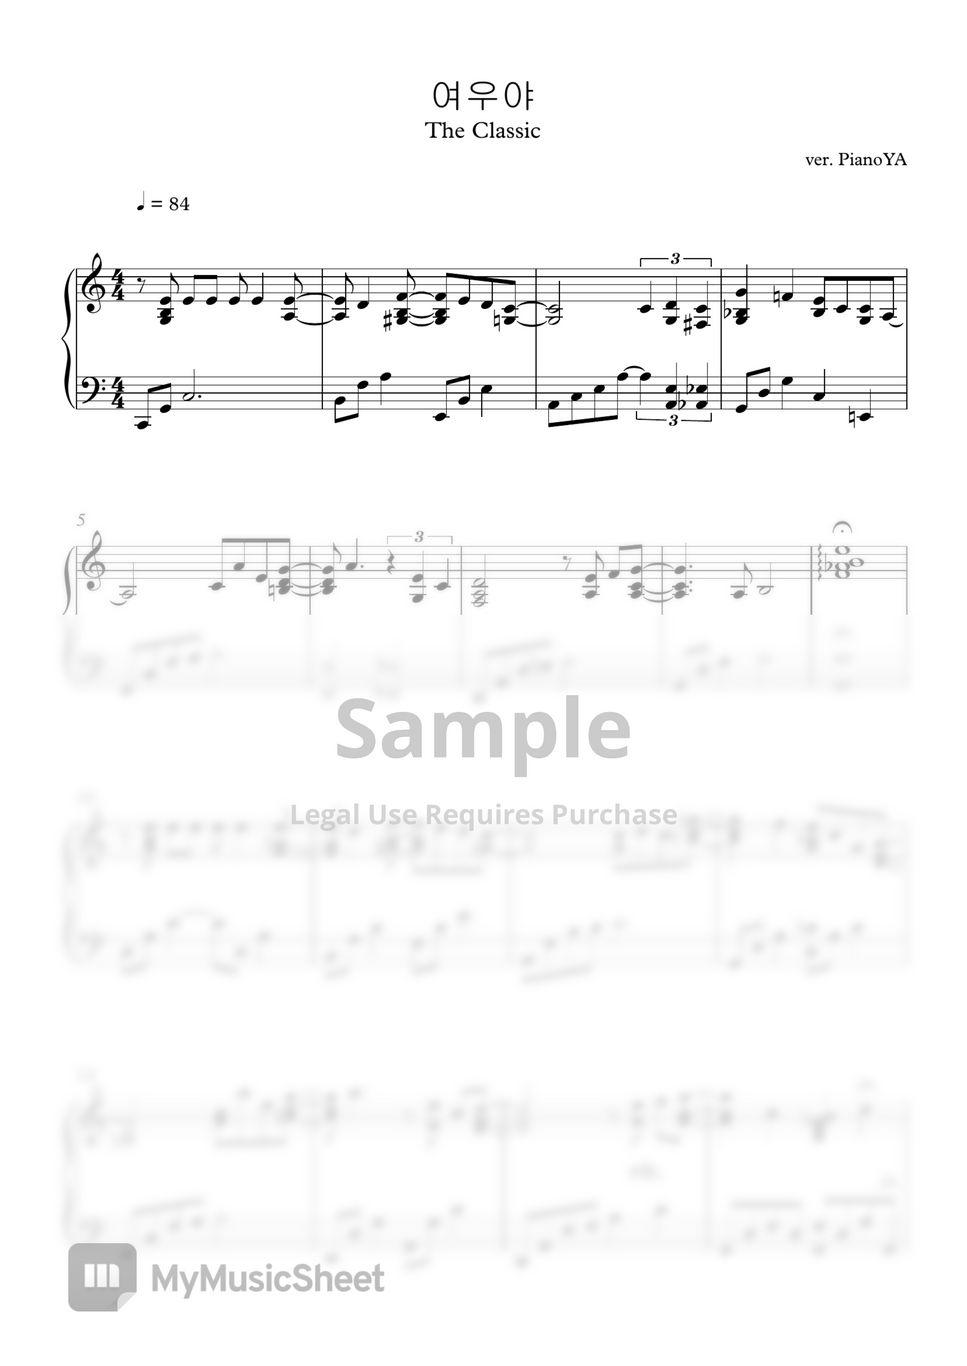 The Classic - YeoUYa (Rumblefish) Sheets by PianoYA